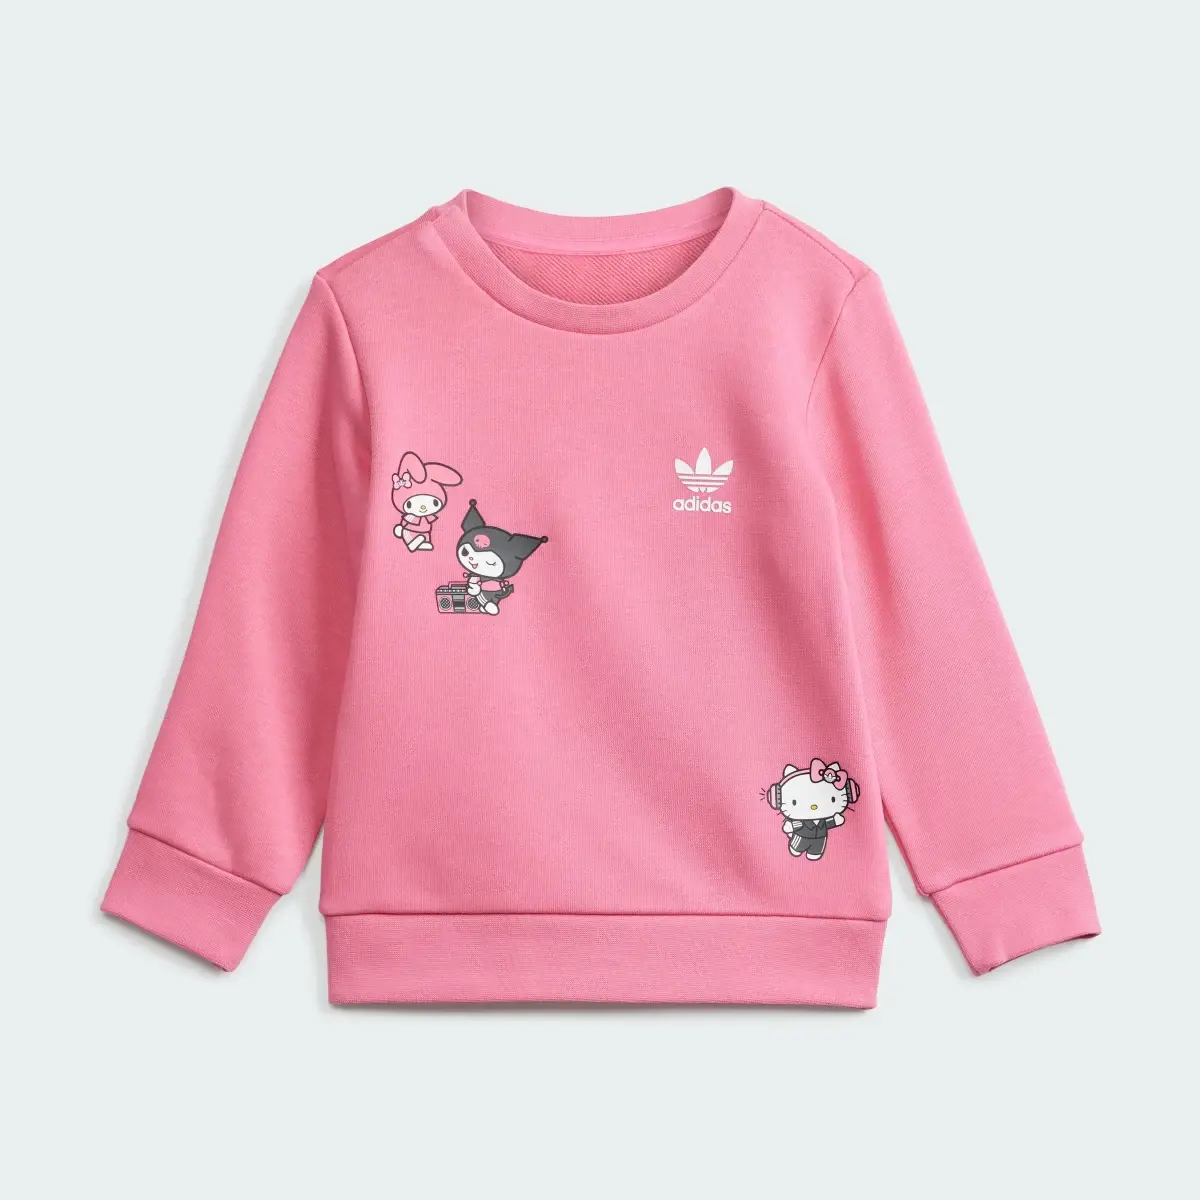 Adidas Originals x Hello Kitty Crew Set. 3